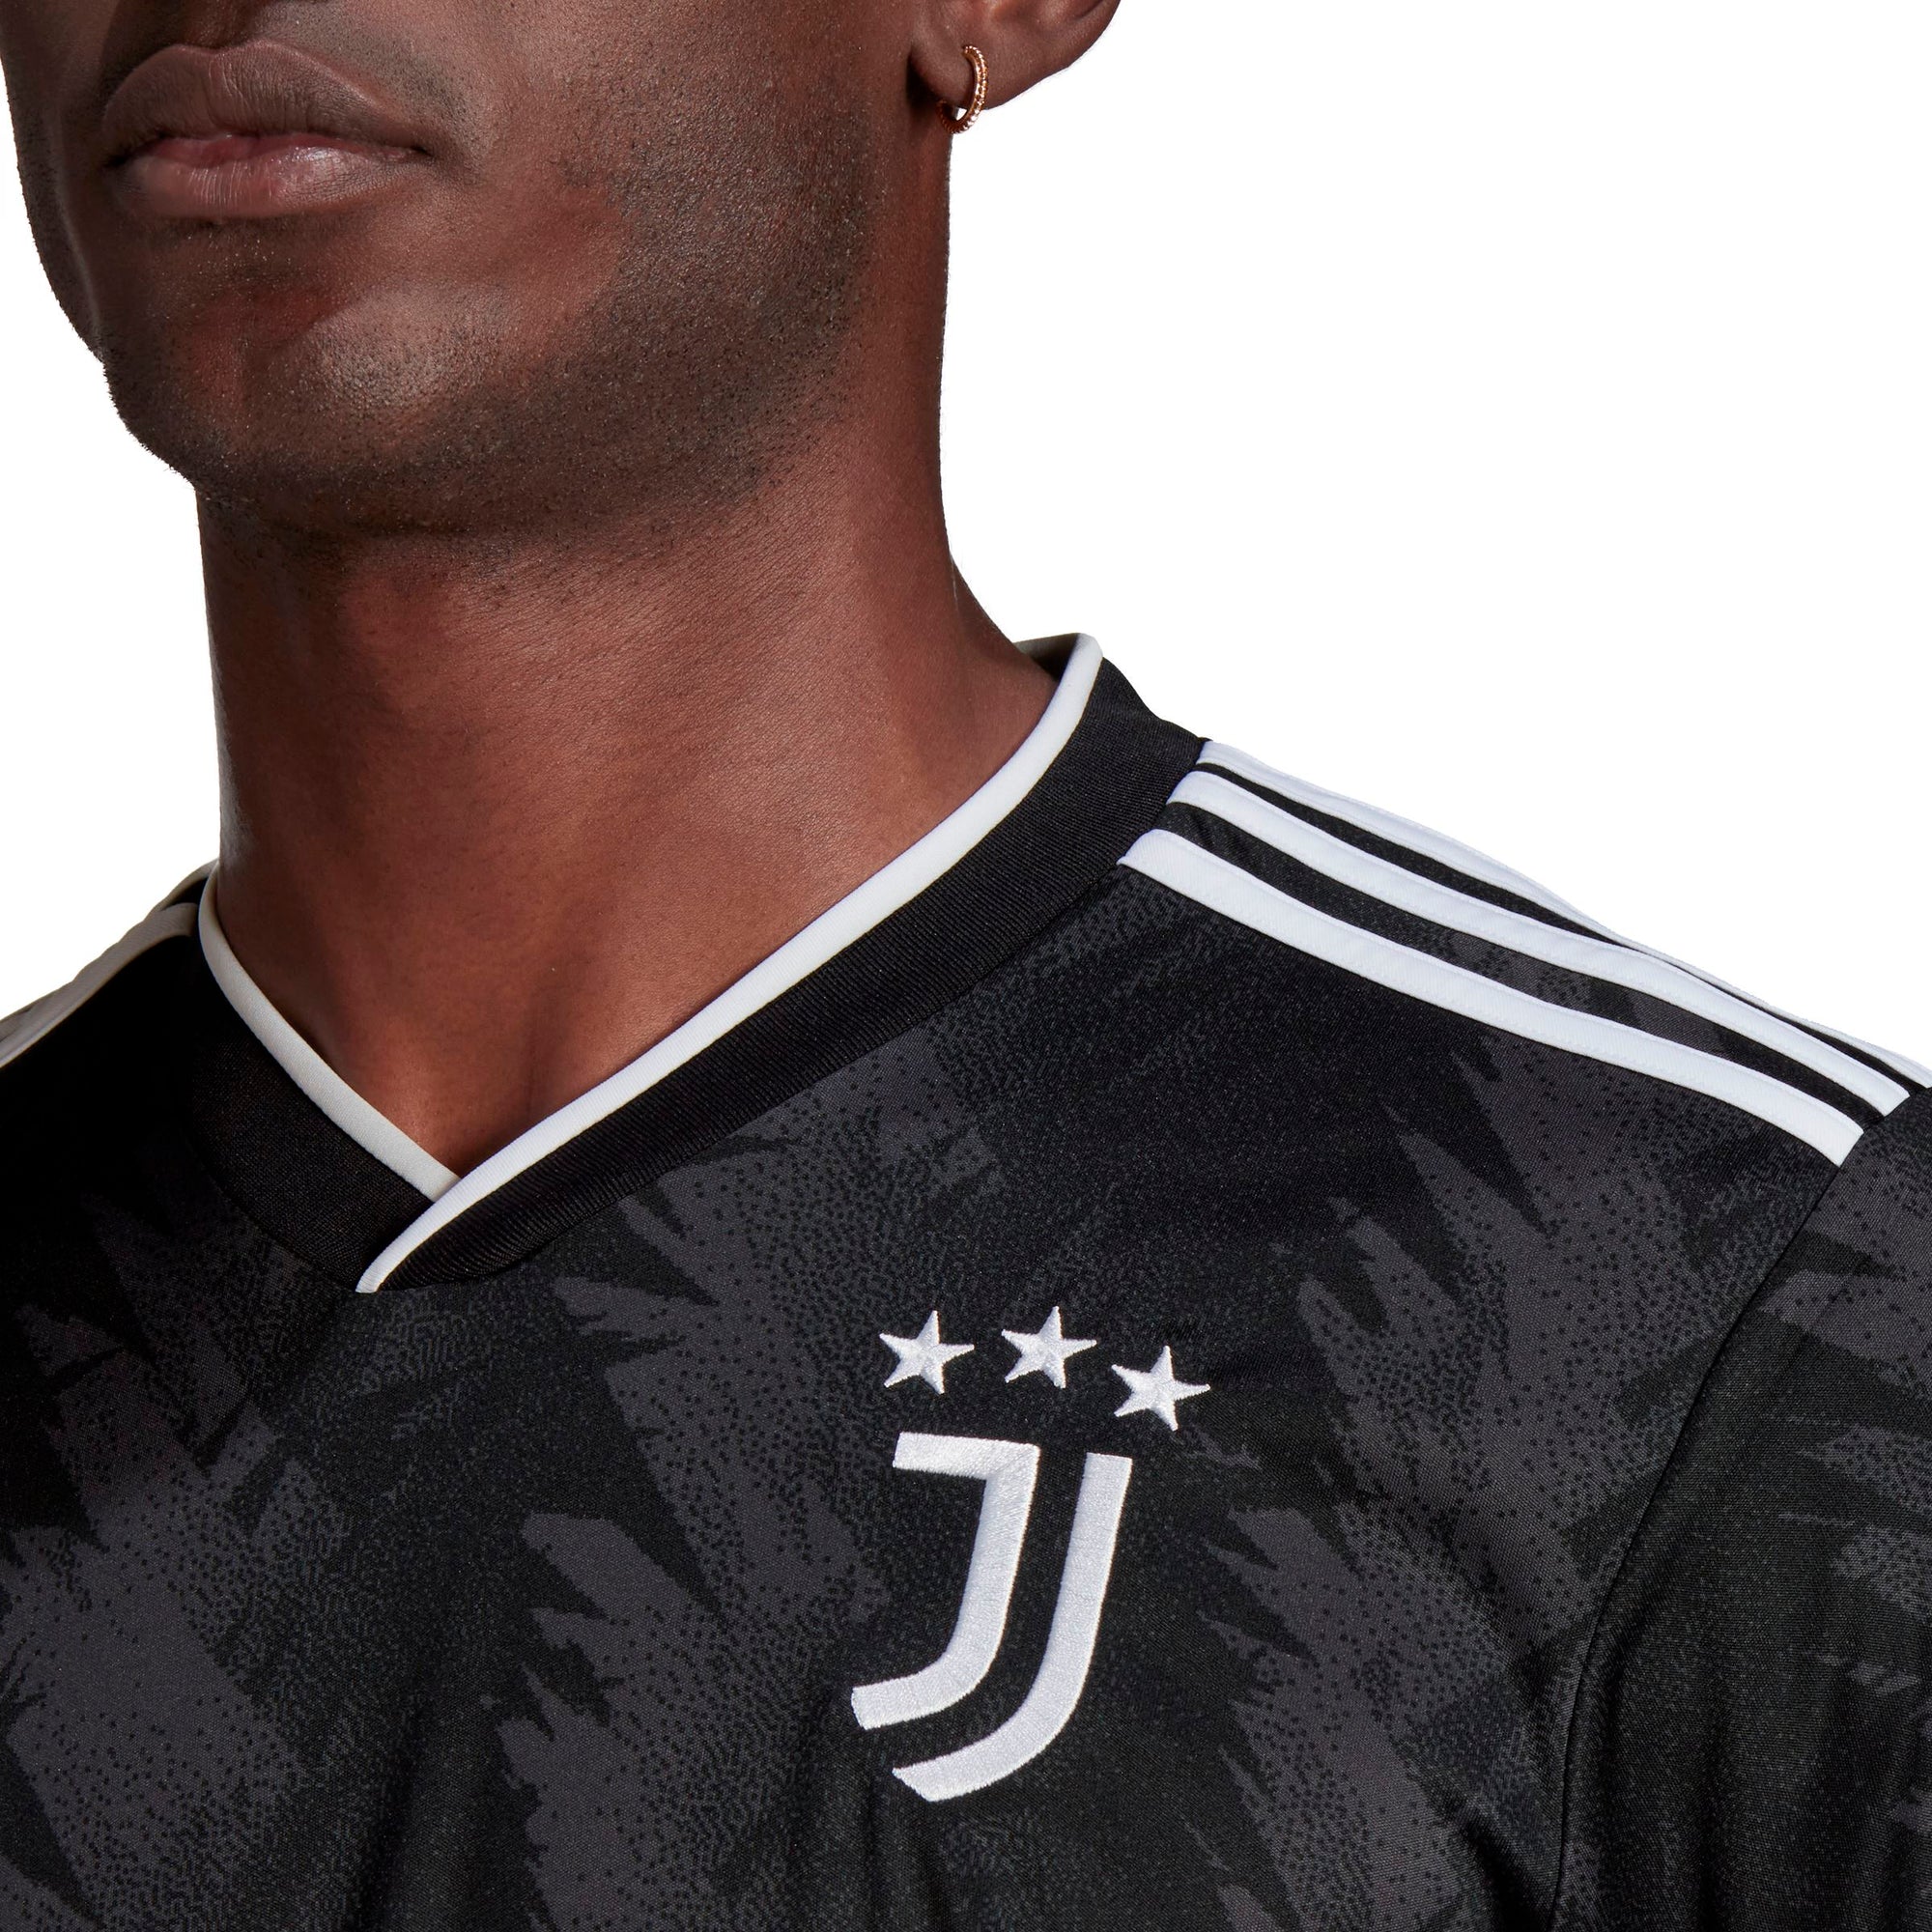 adidas Men's Juventus 22/23 Away Jersey | HD2015 Jersey Adidas 